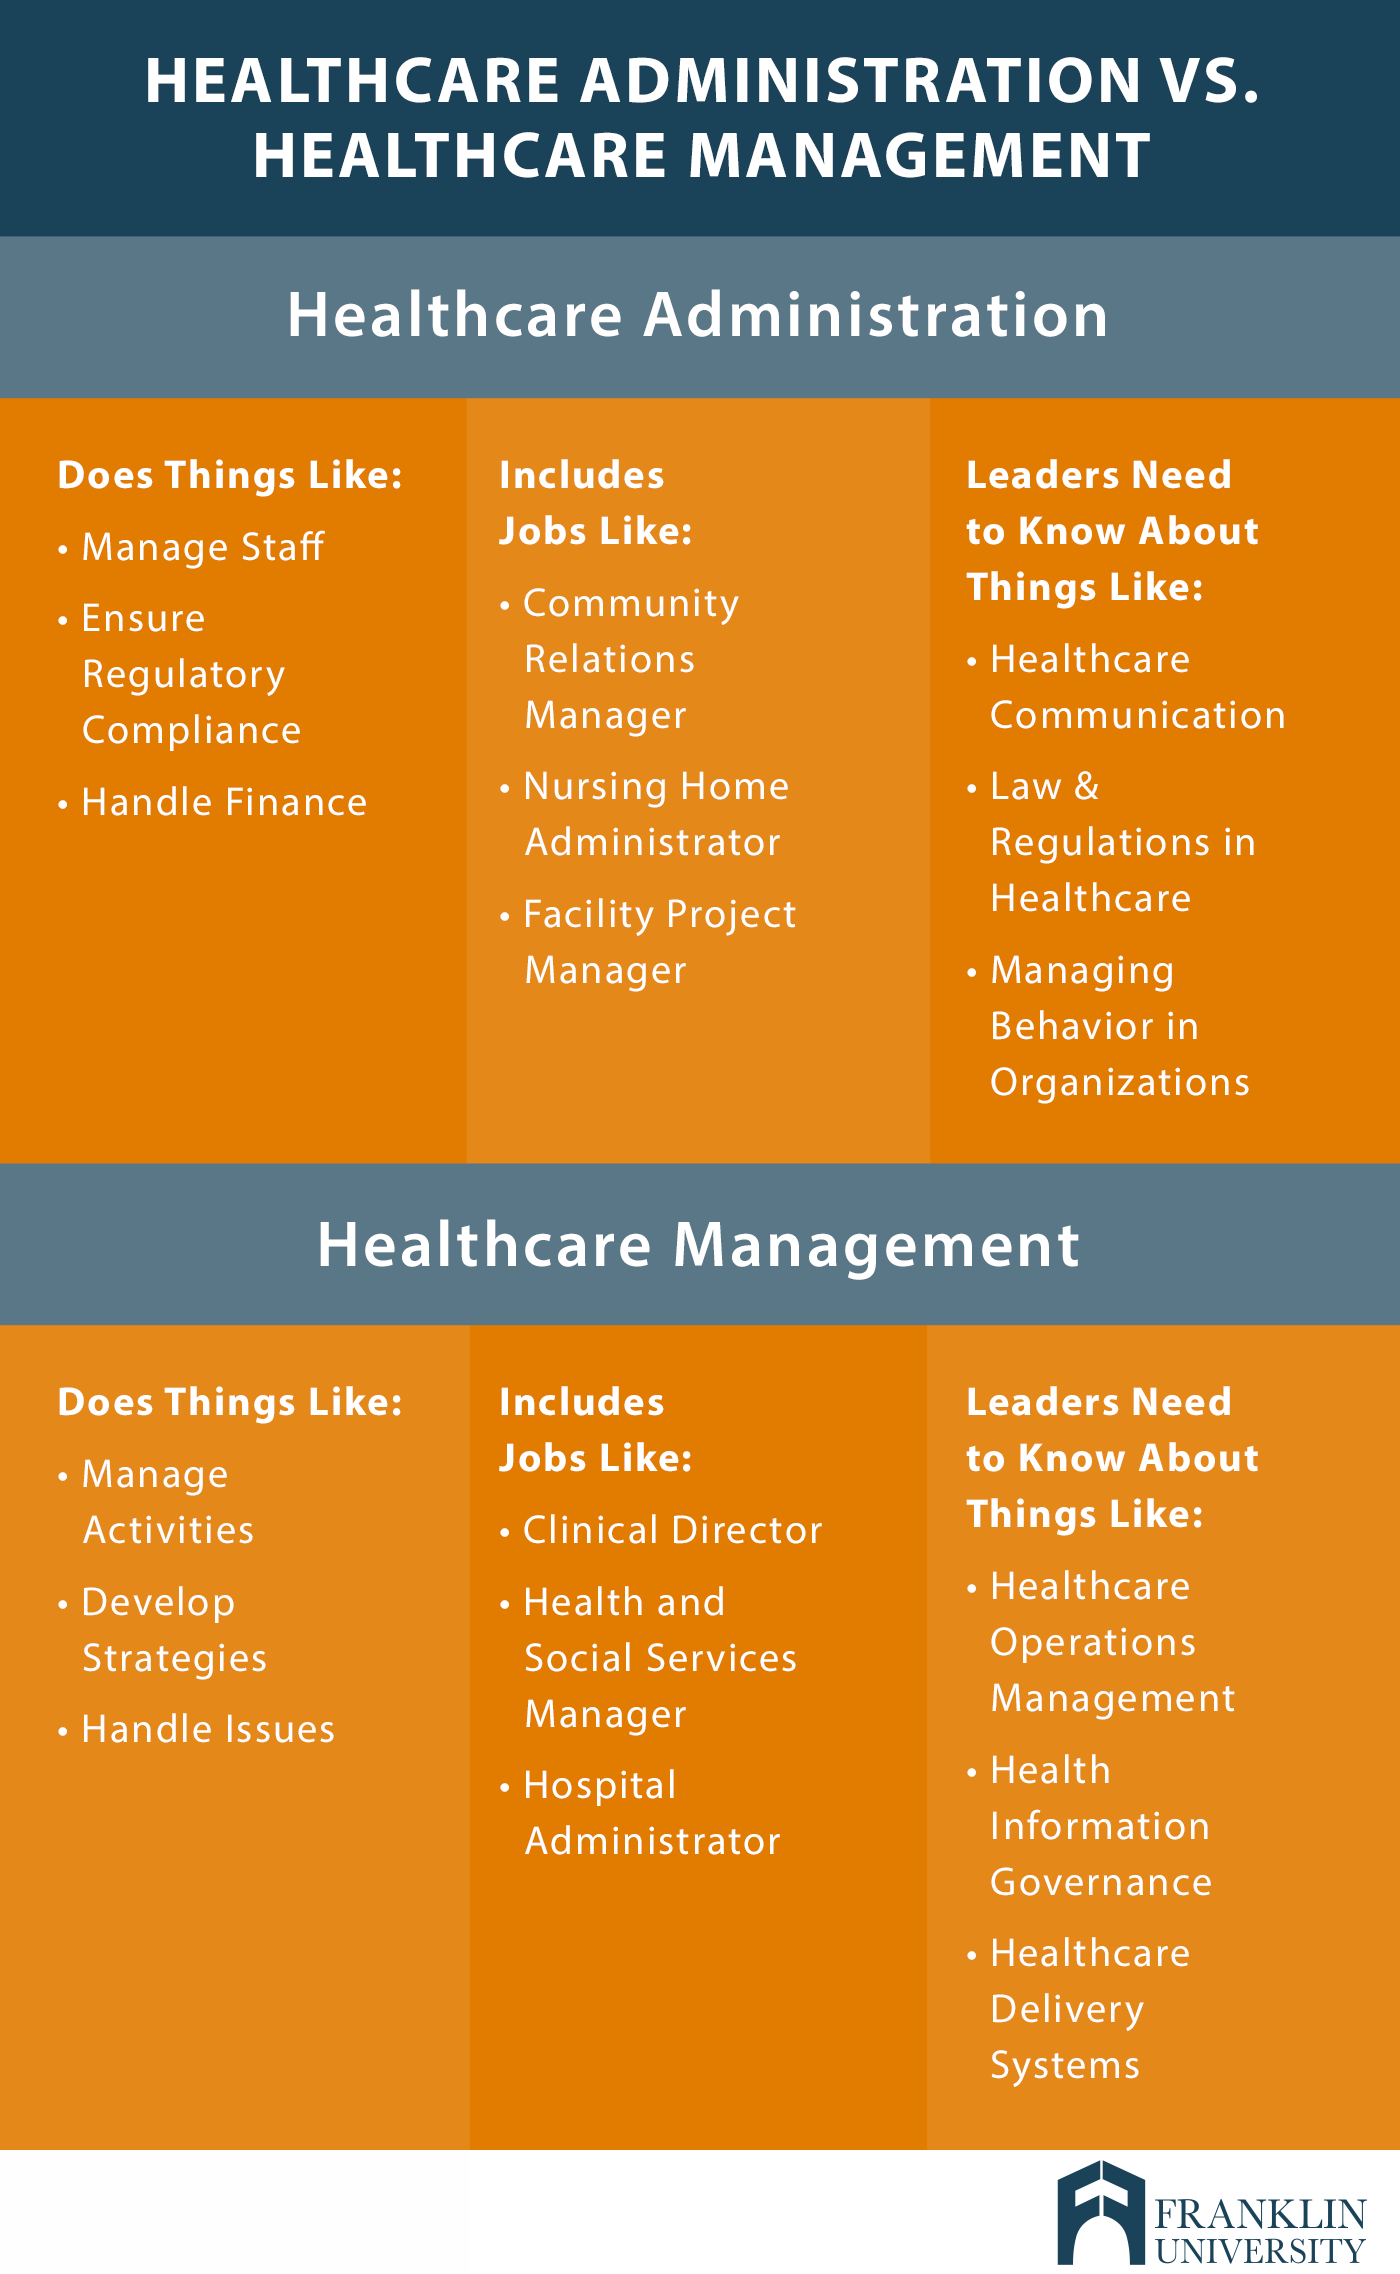 graphic describes healthcare administration versus healthcare management